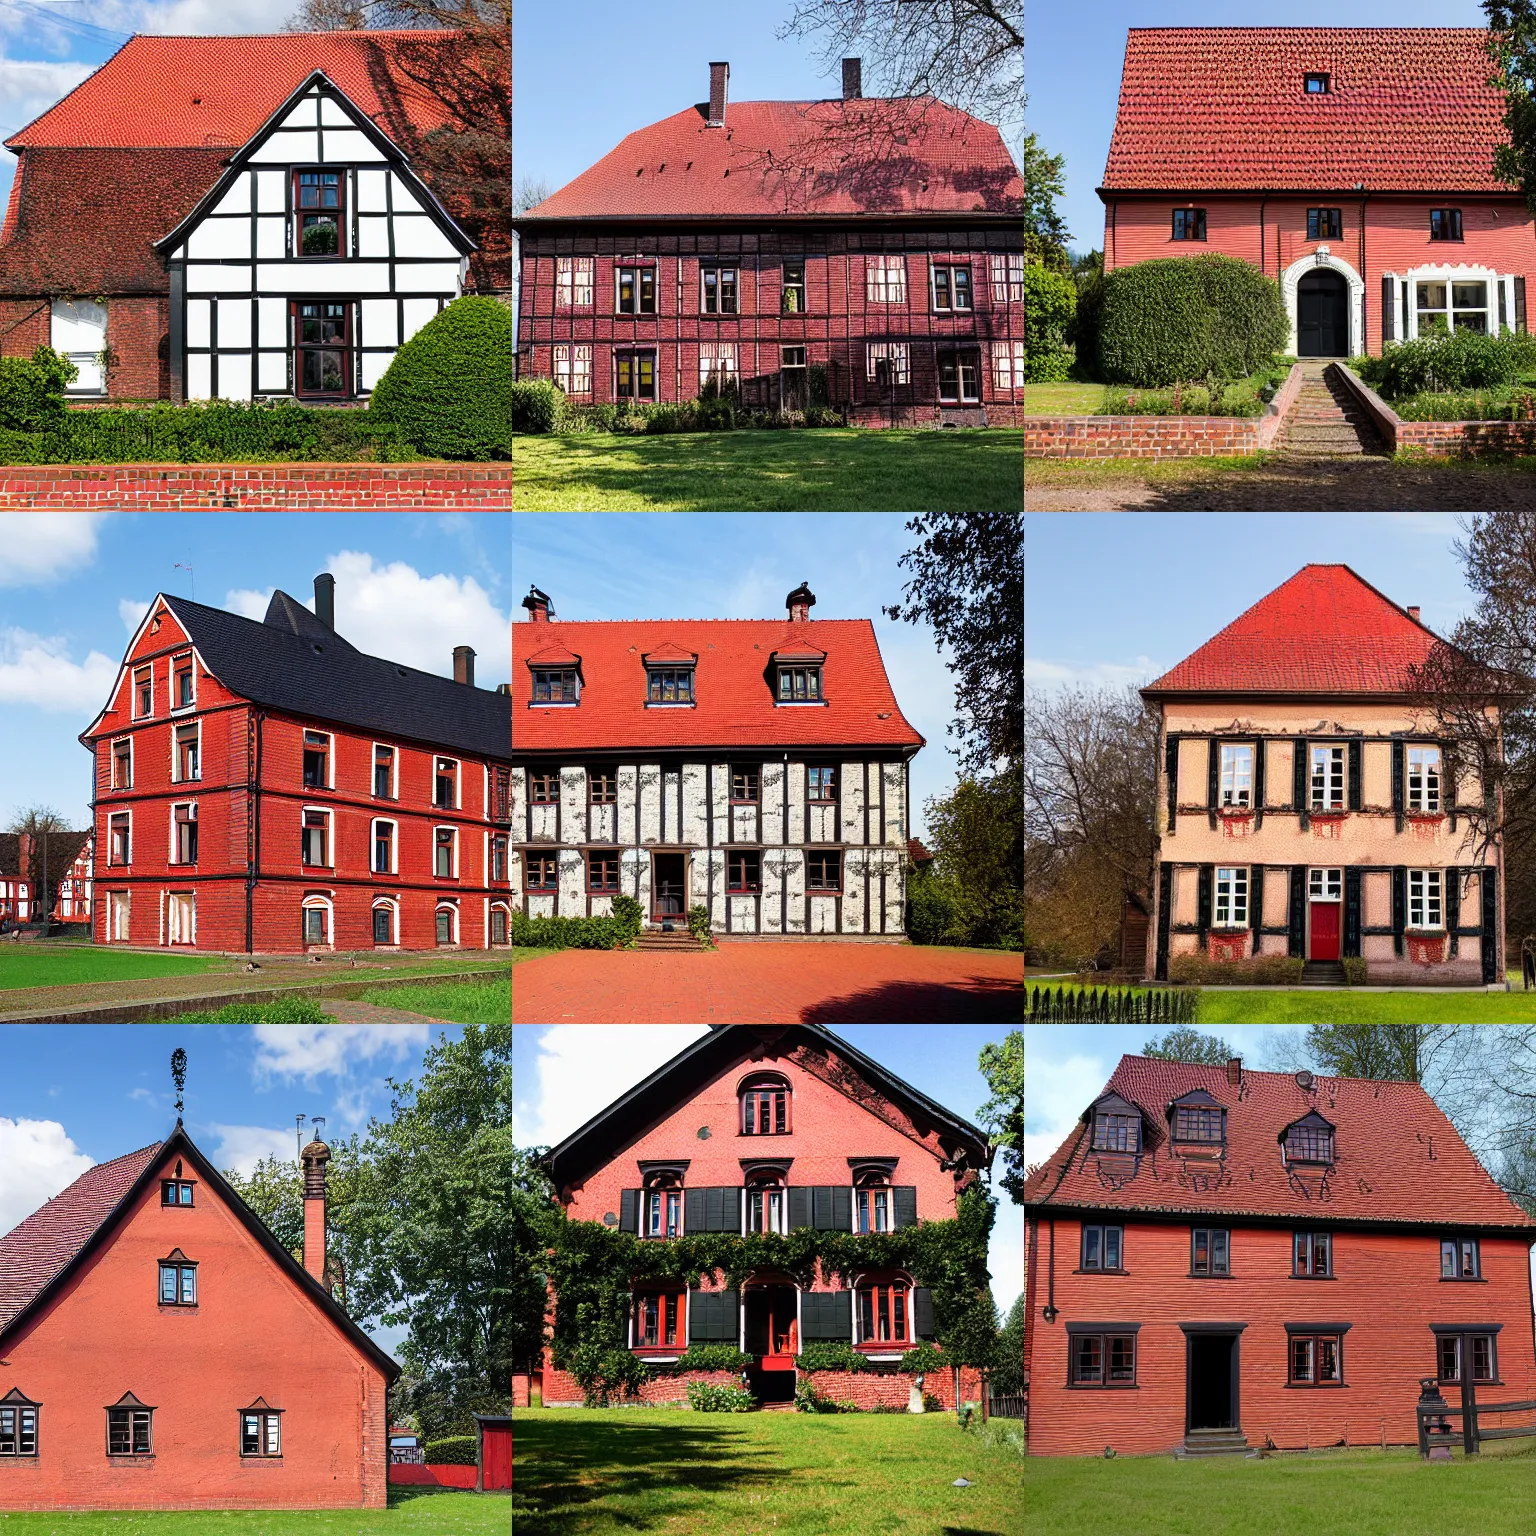 Prompt: 1 8 8 0 s big german farmhouse, red bricks, black roof, hannover, lower saxony